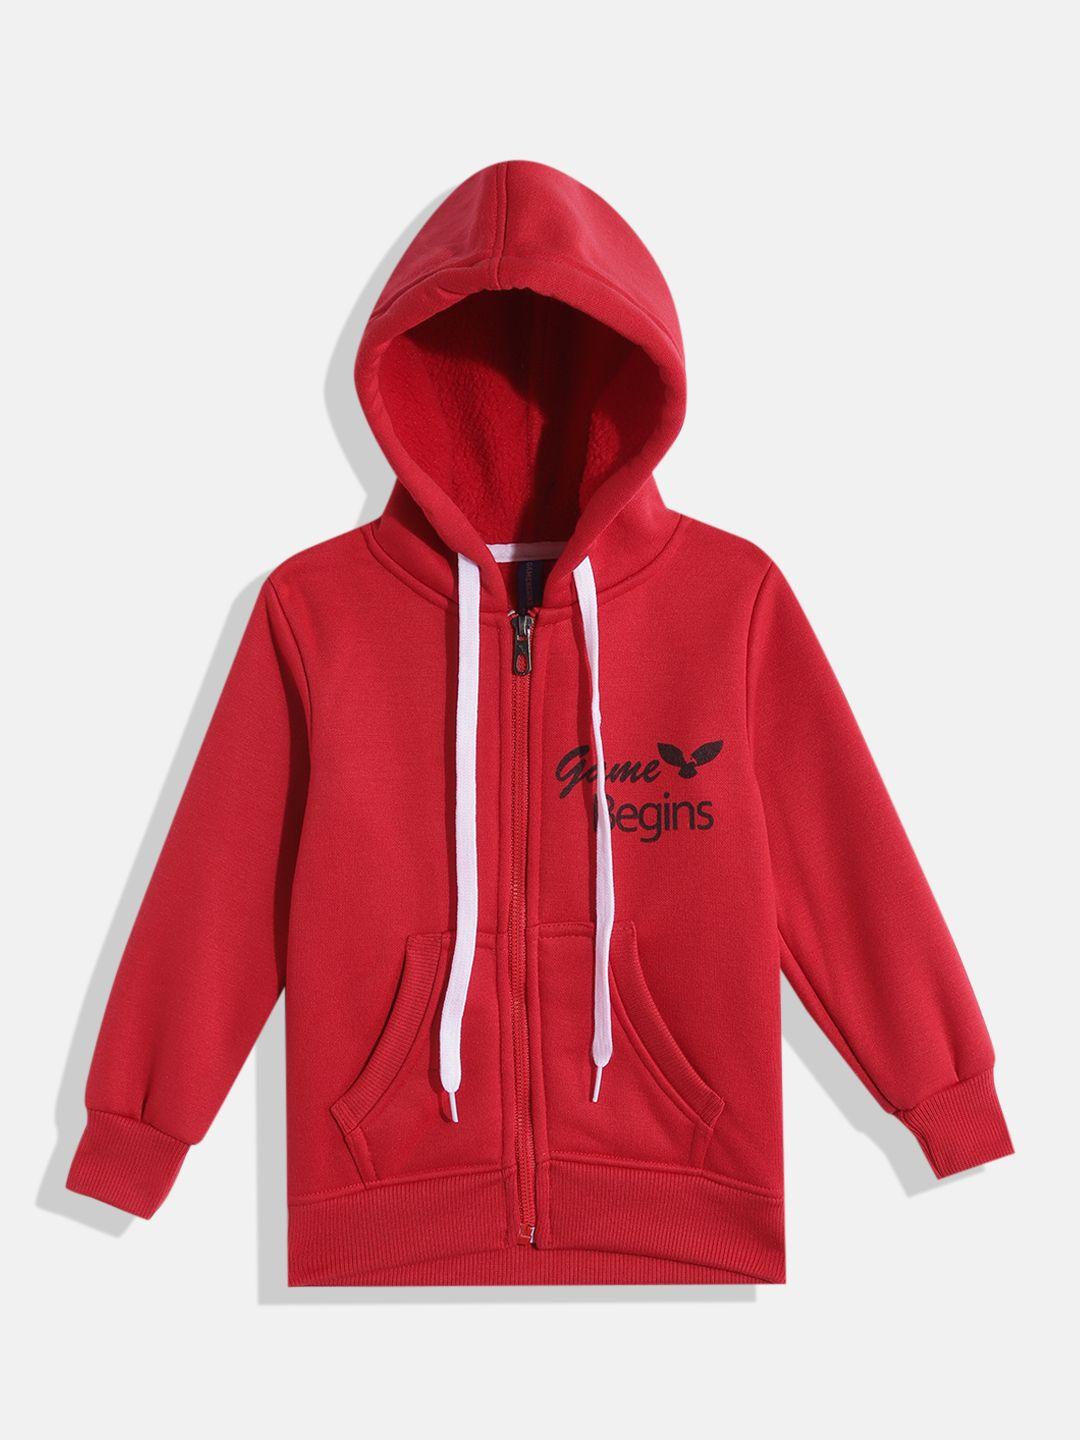 game begins boys red & black pure cotton brand logo print hooded sweatshirt